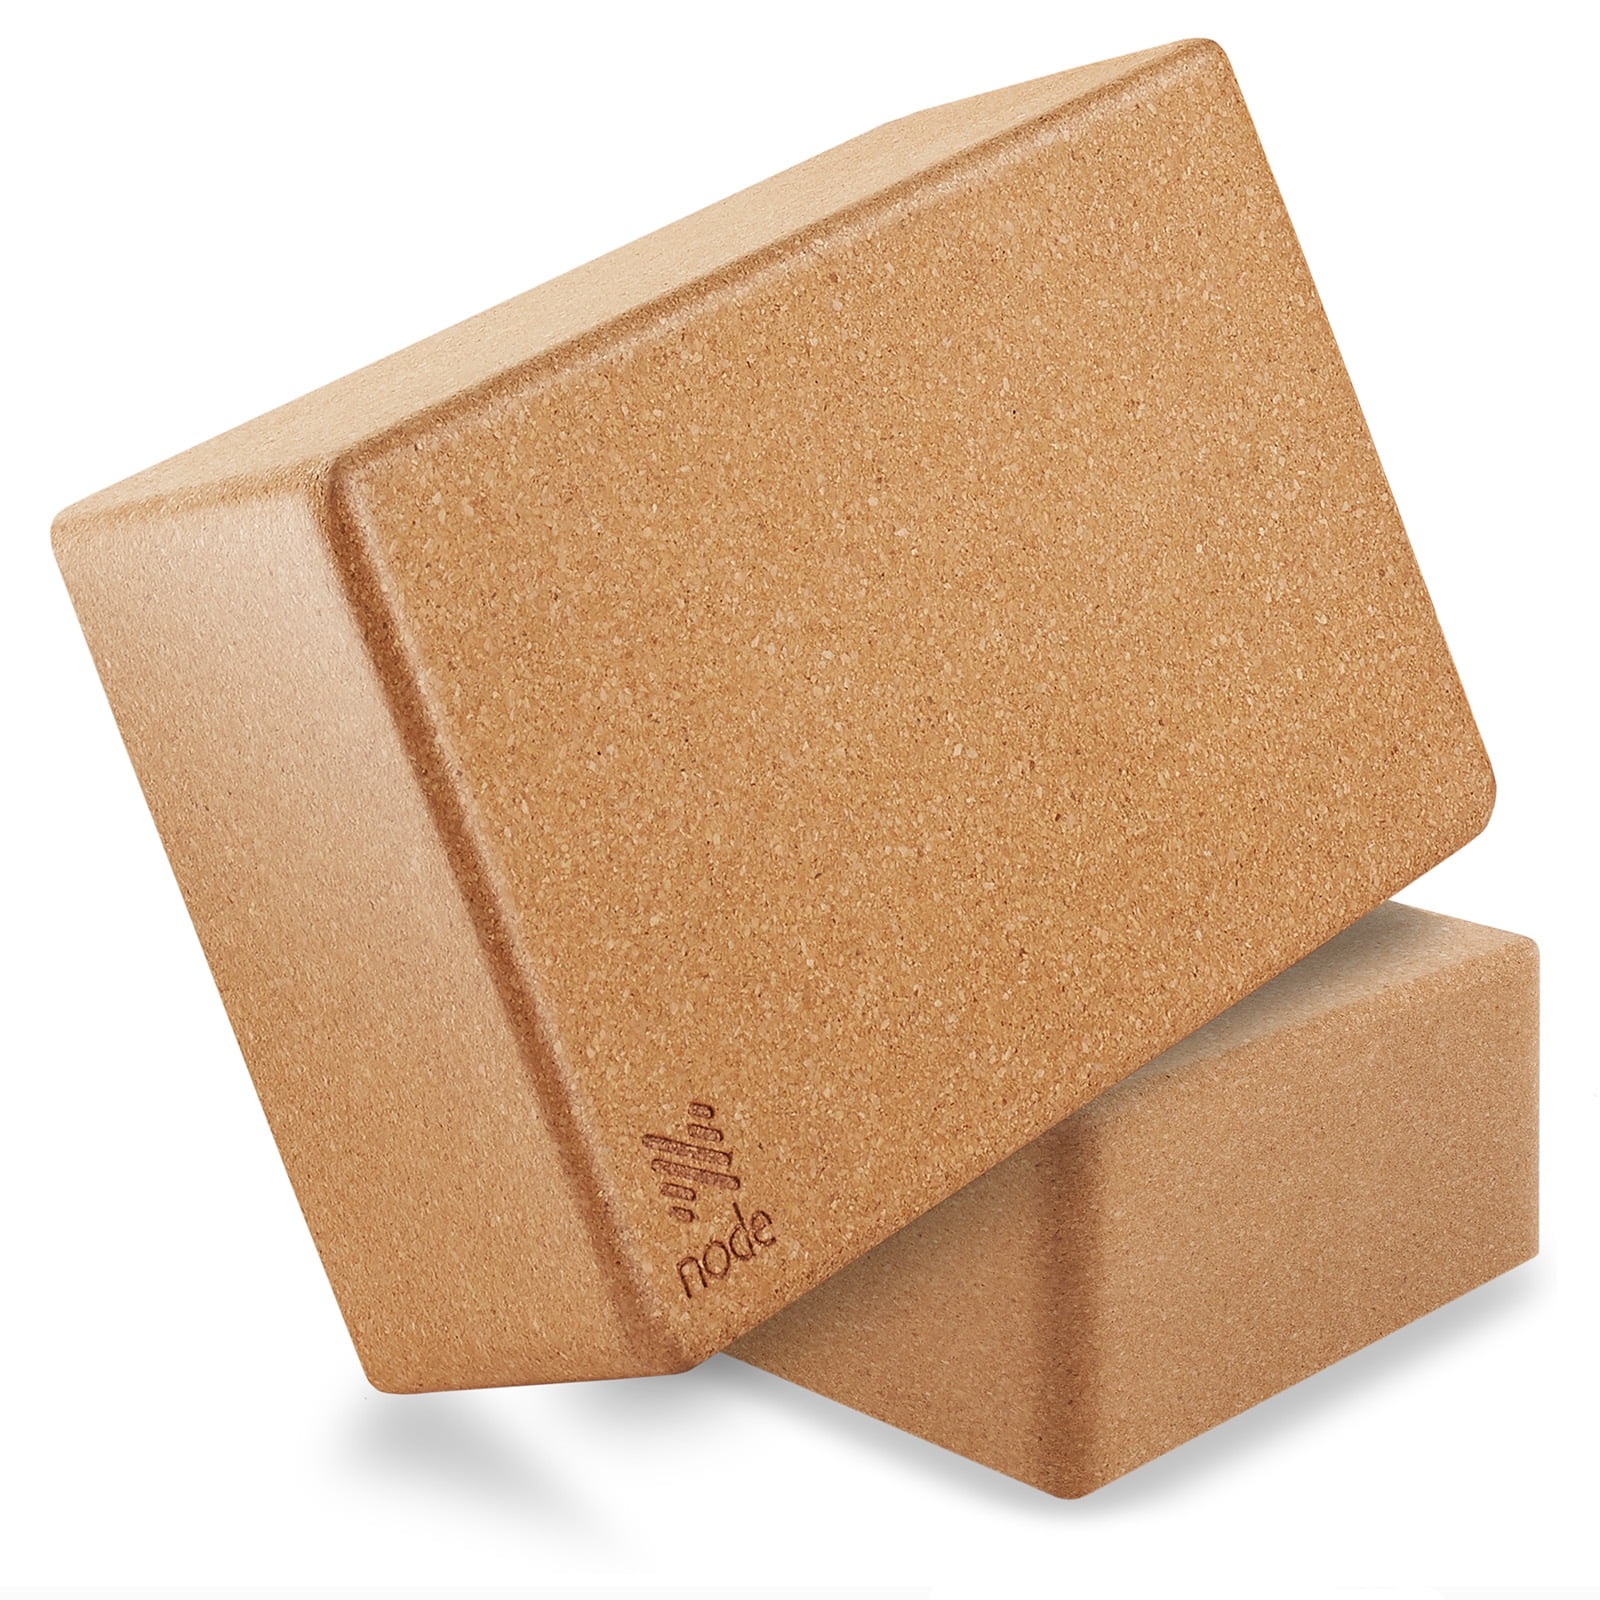 Details about    Yoga Block Plus Strap with Metal D-Ring Yoga Brick Cork Yoga Block High Density 